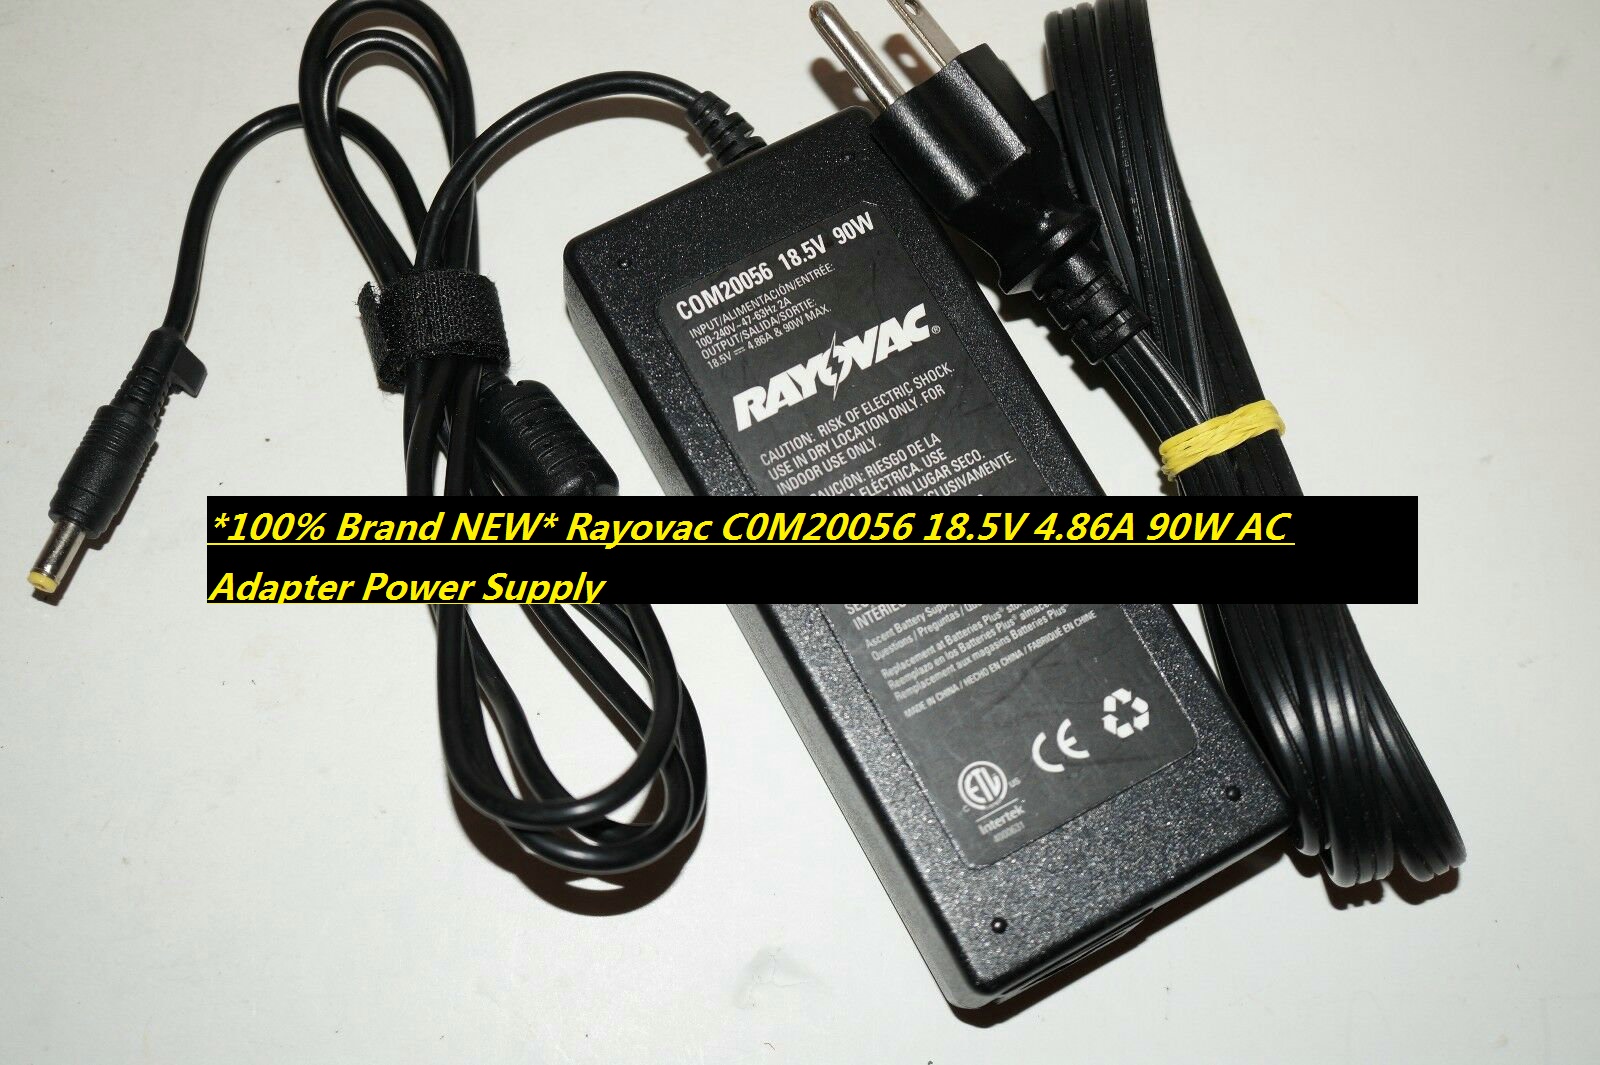 *100% Brand NEW* Rayovac C0M20056 18.5V 4.86A 90W AC Adapter Power Supply